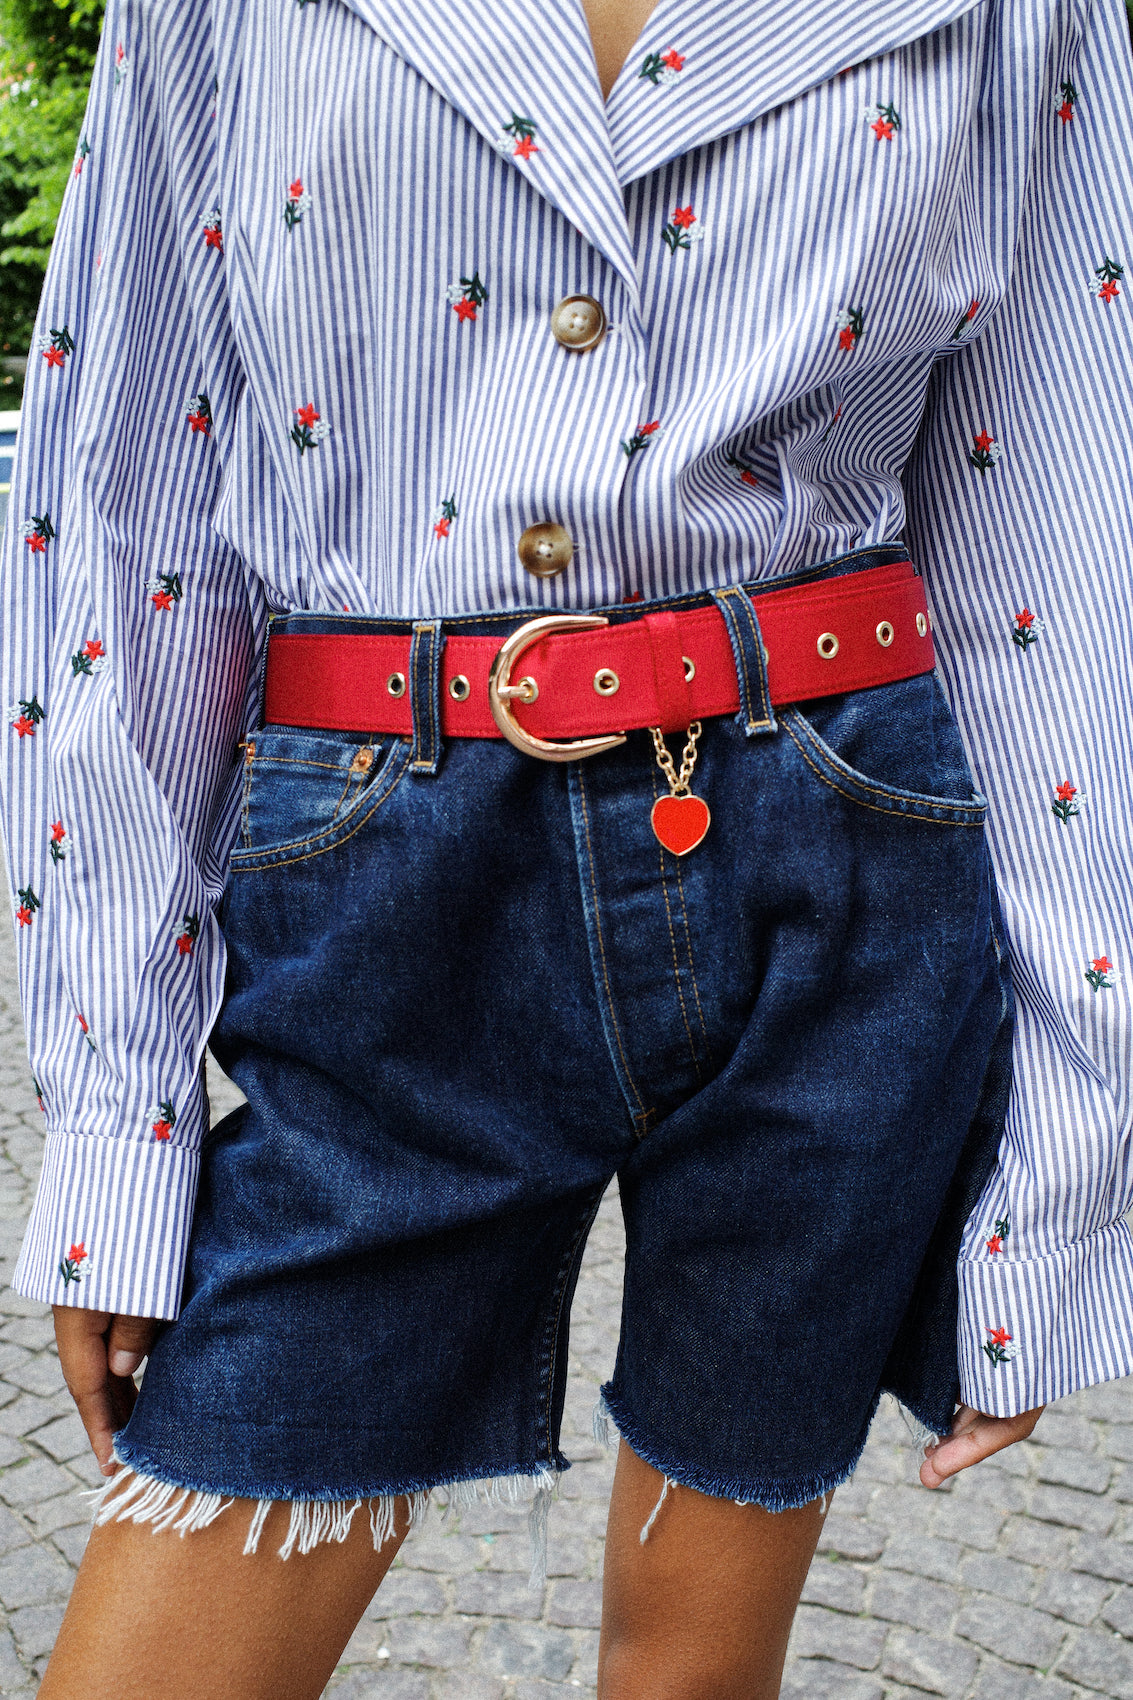 Snoopy Belt - Bright Red